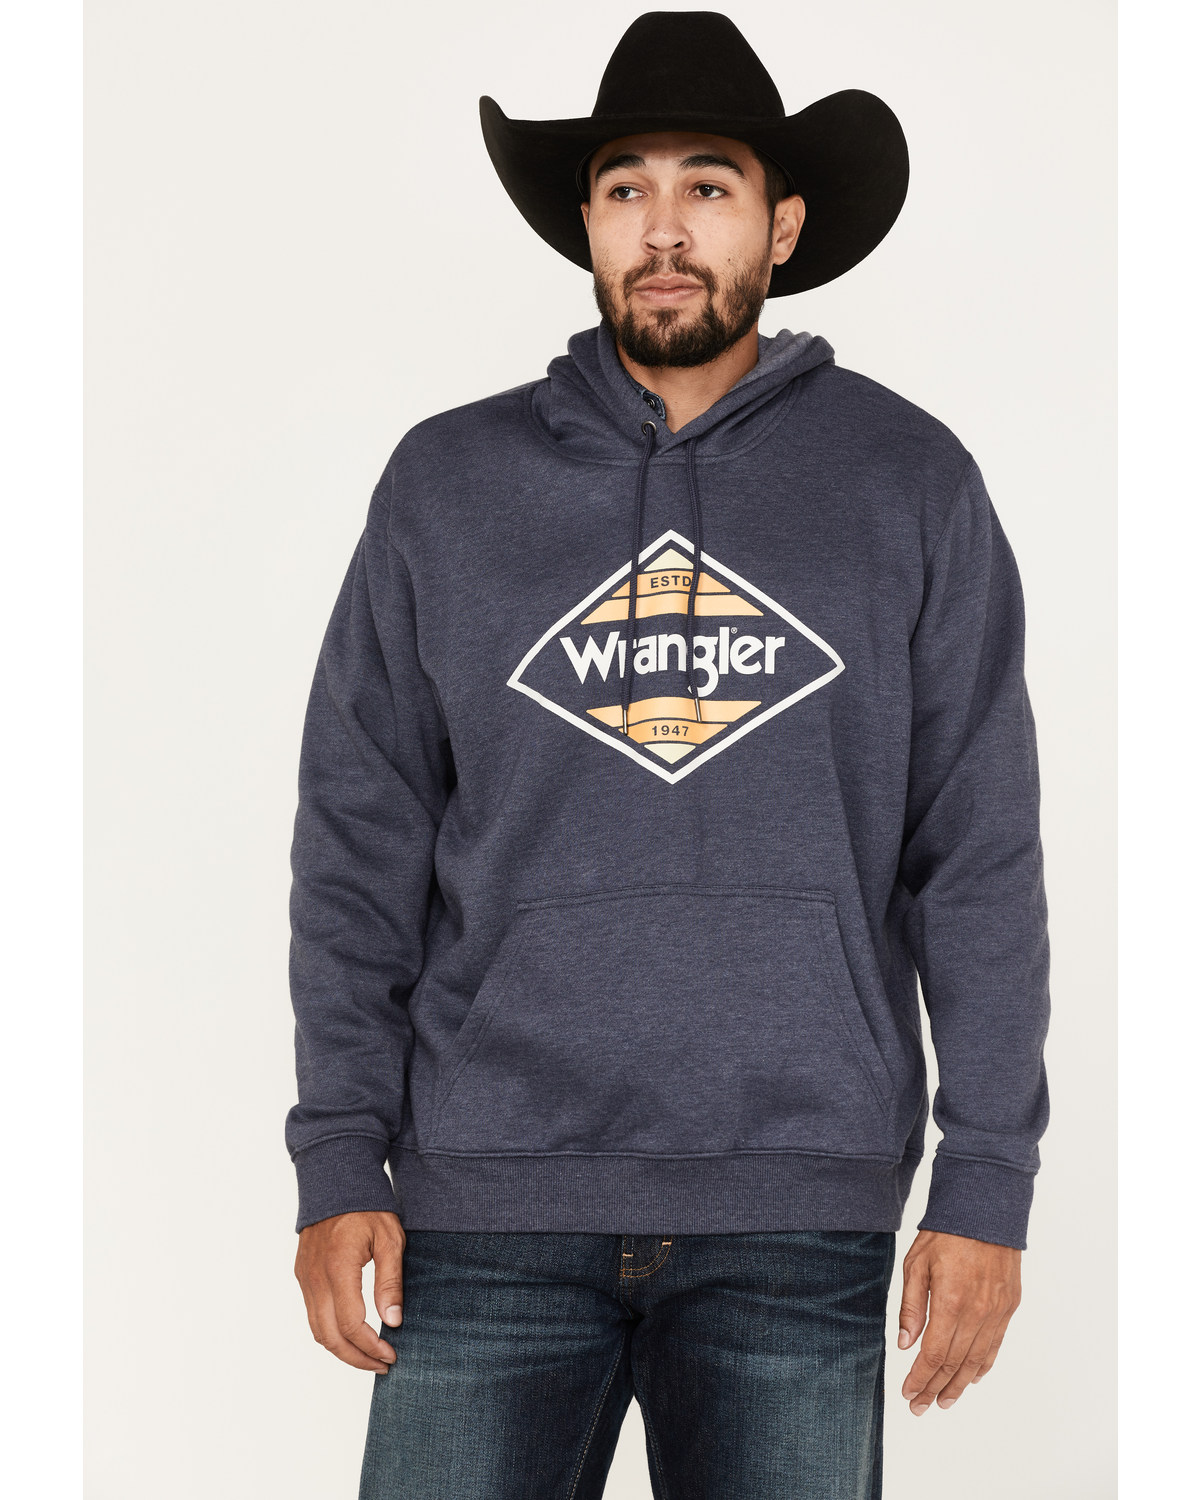 Wrangler Men's Southwestern Logo Graphic Hooded Sweatshirt